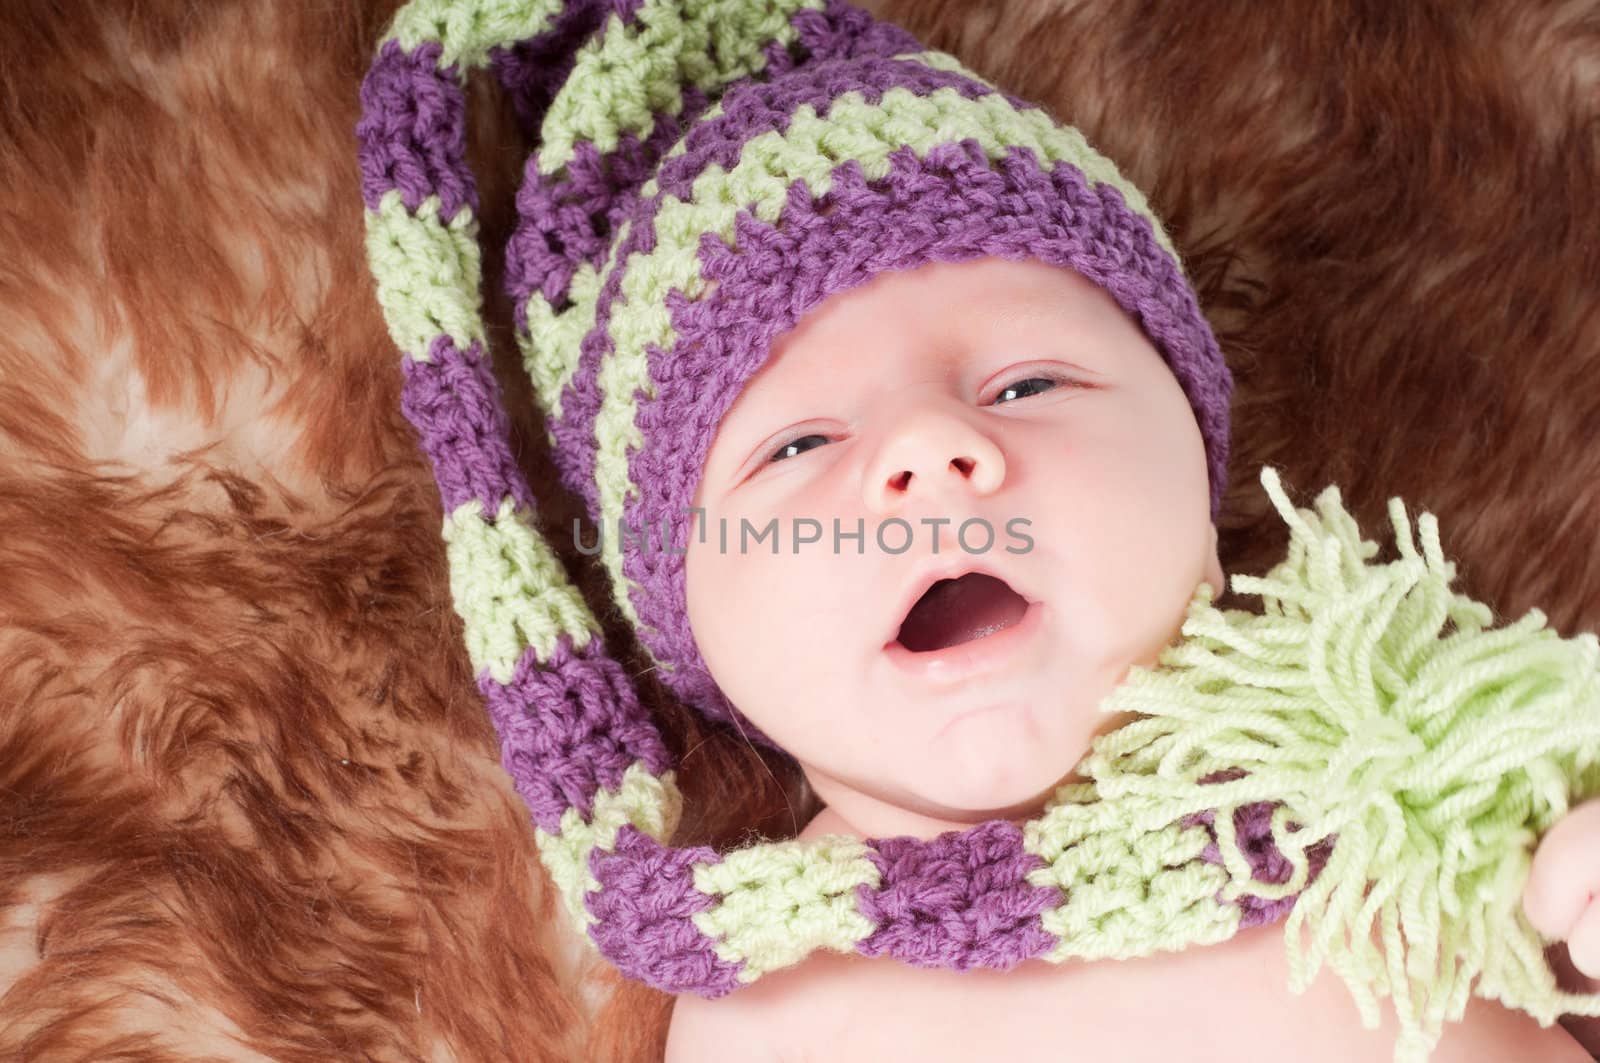 Newborn baby in long knited hat by anytka